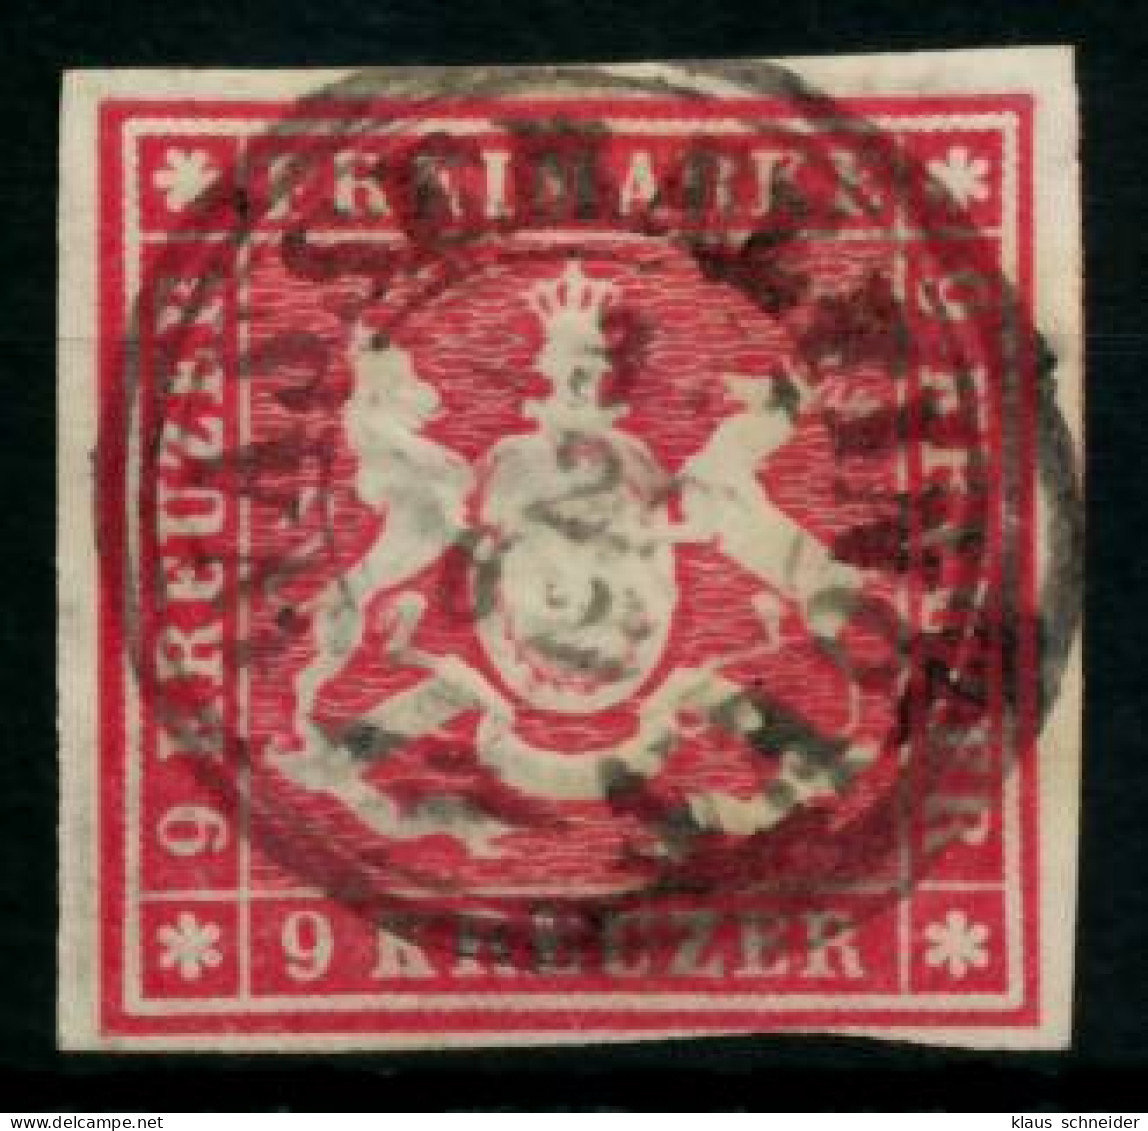 WÜRTTEMBERG AUSGABE VON 1859 Nr 14a Zentrisch Gestempelt X6BBB96 - Oblitérés